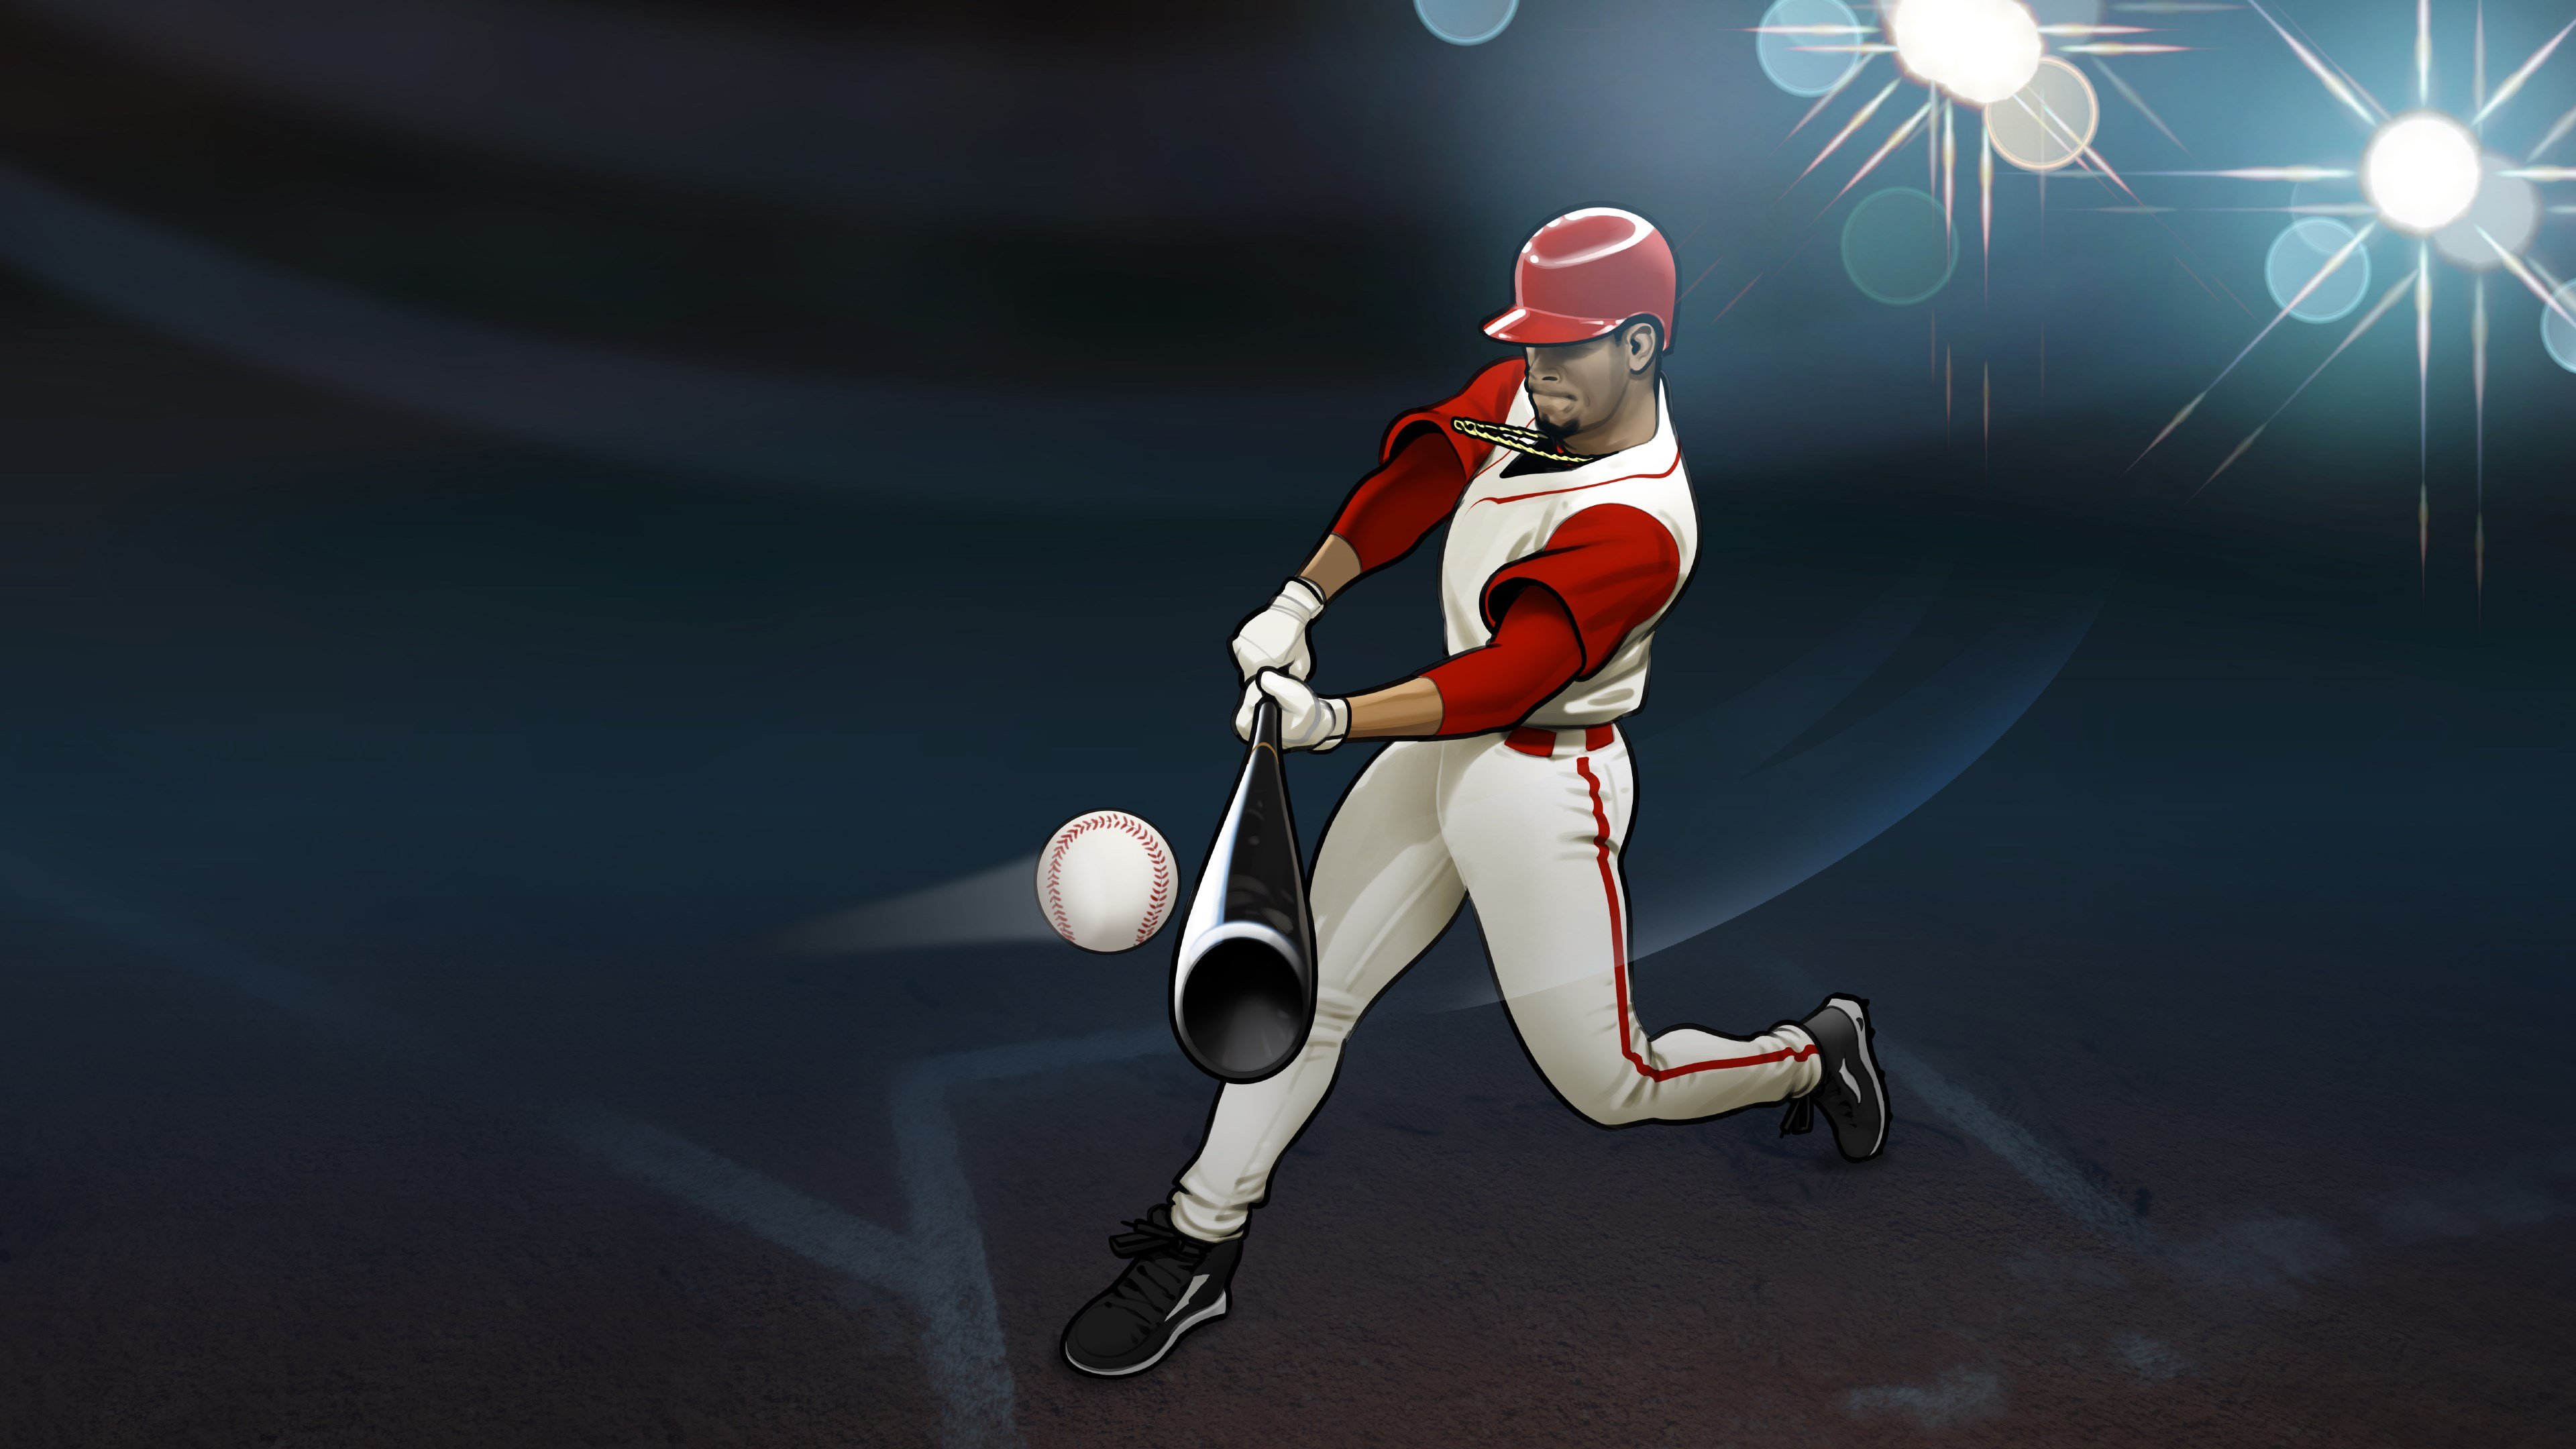 Super Mega Baseball 3 cover image